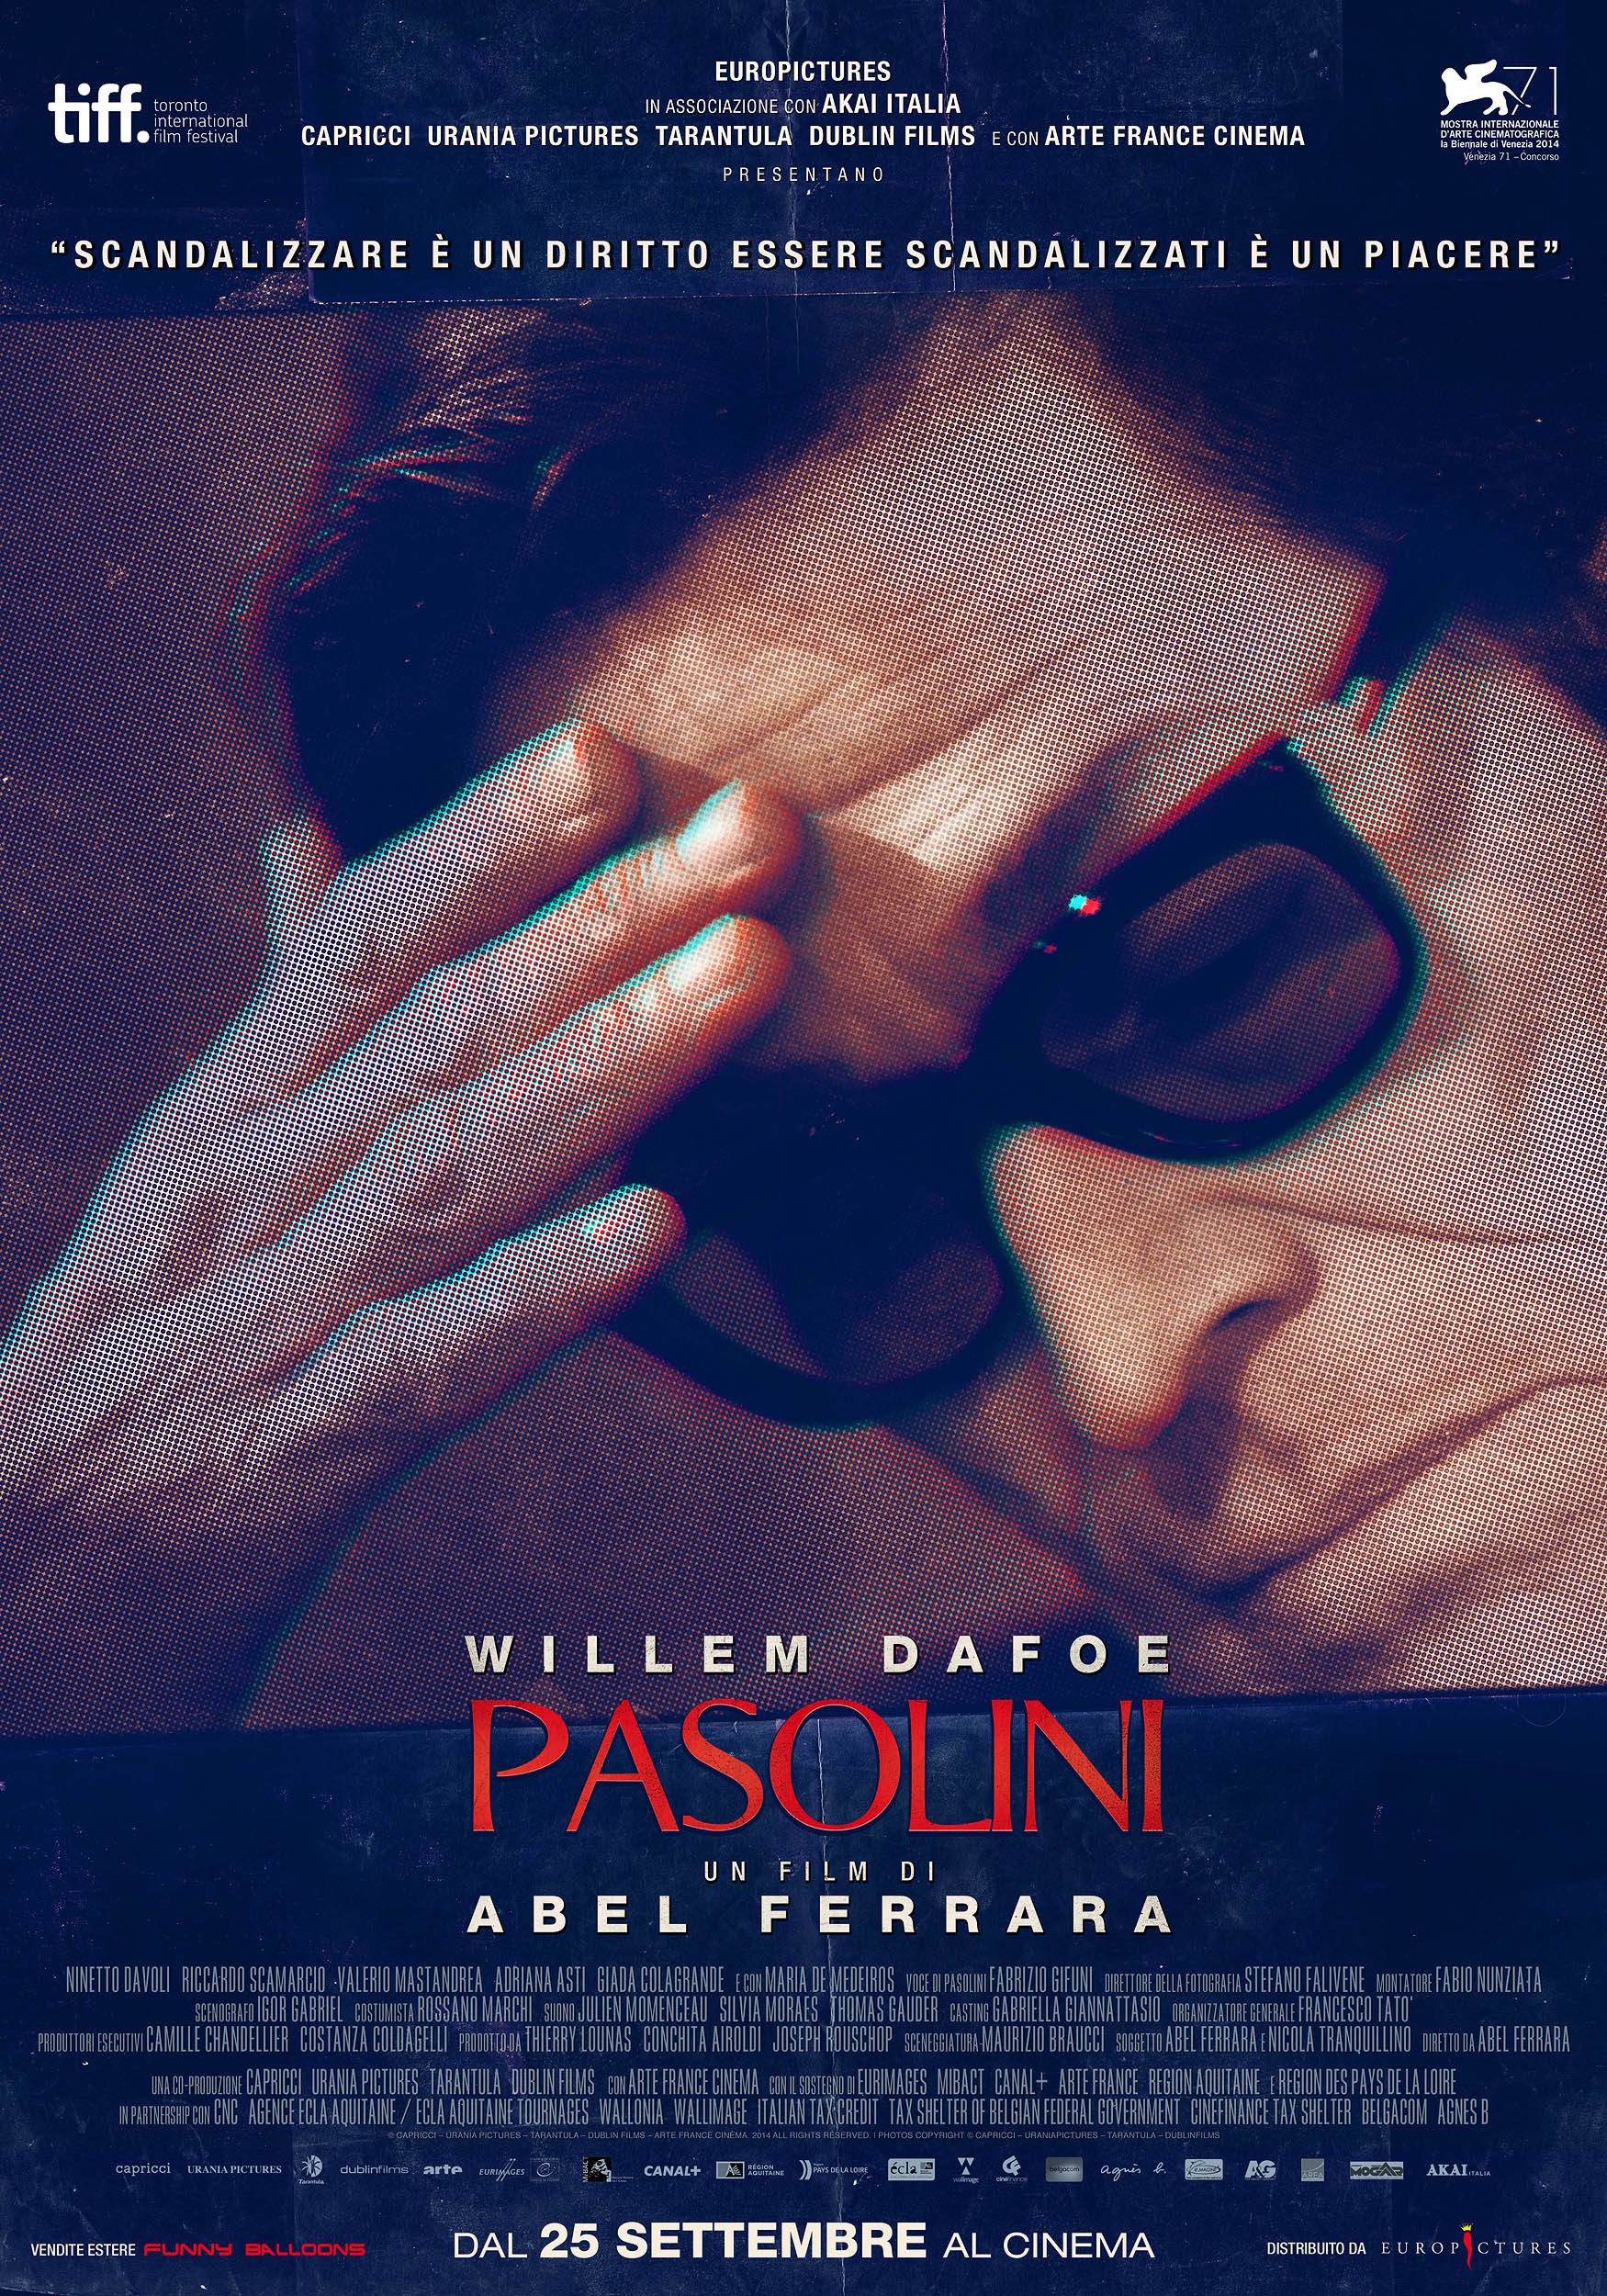 Mega Sized Movie Poster Image for Pasolini (#2 of 5)